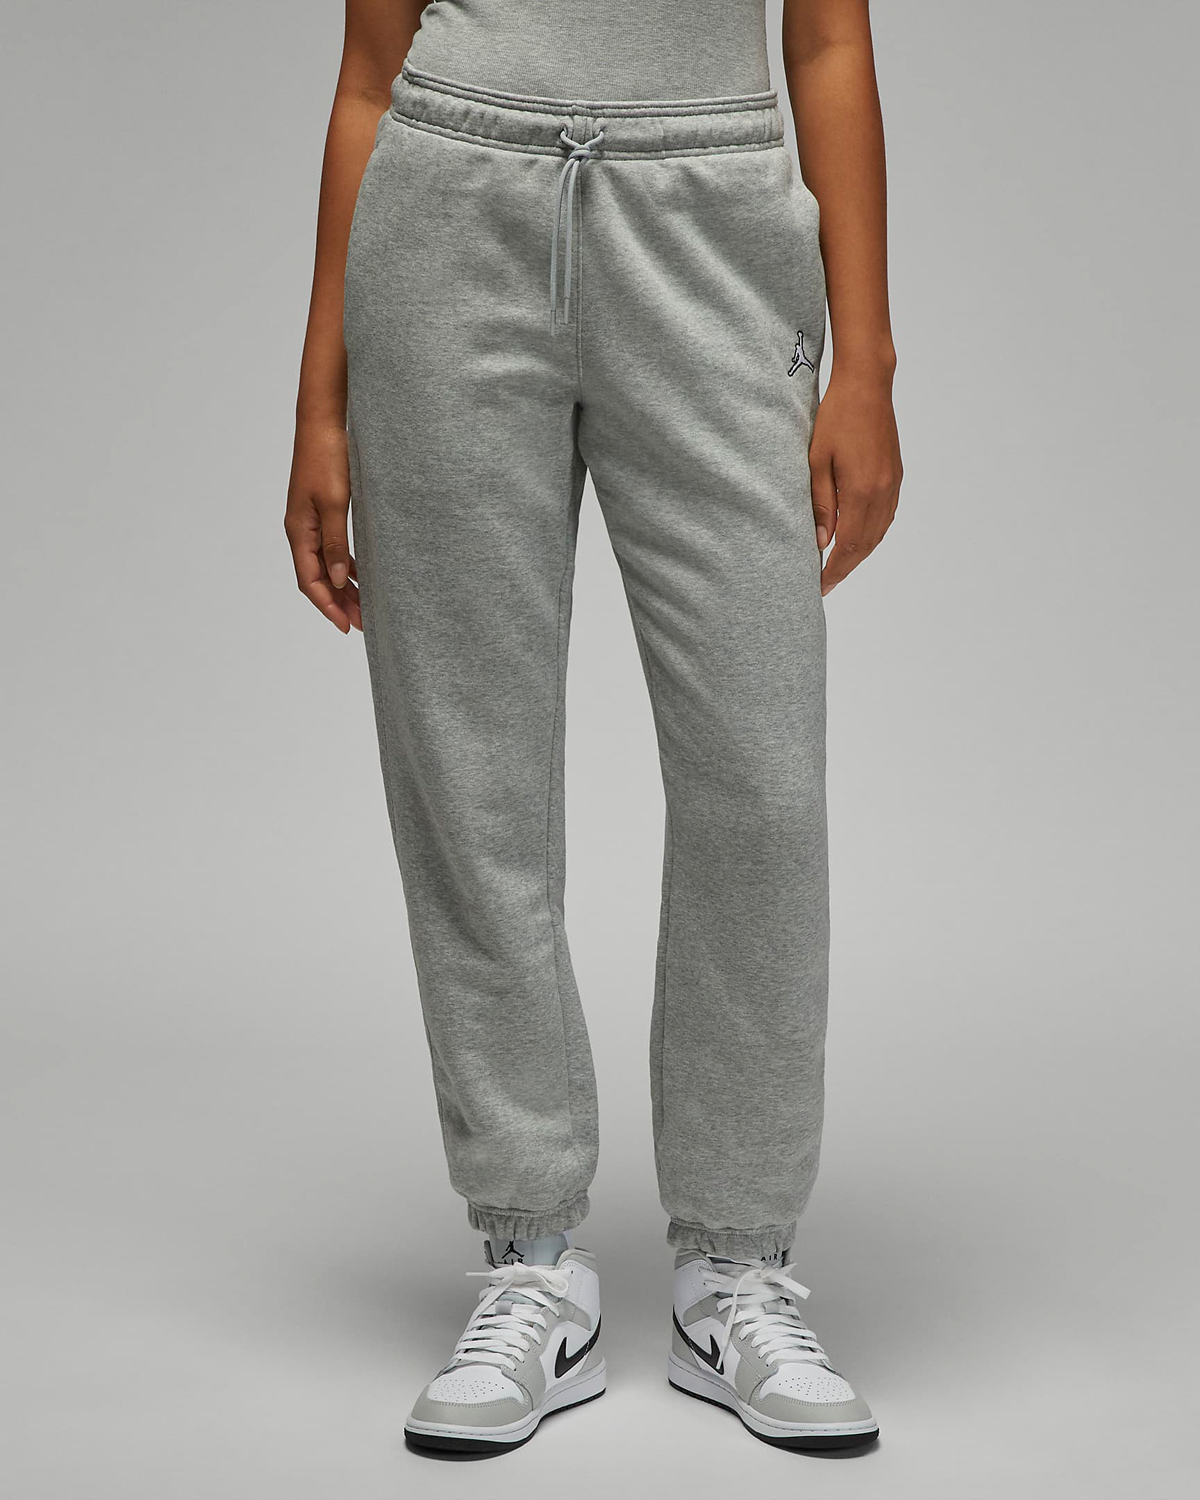 Jordan-Brooklyn-Womens-Fleece-Pants-Grey-1